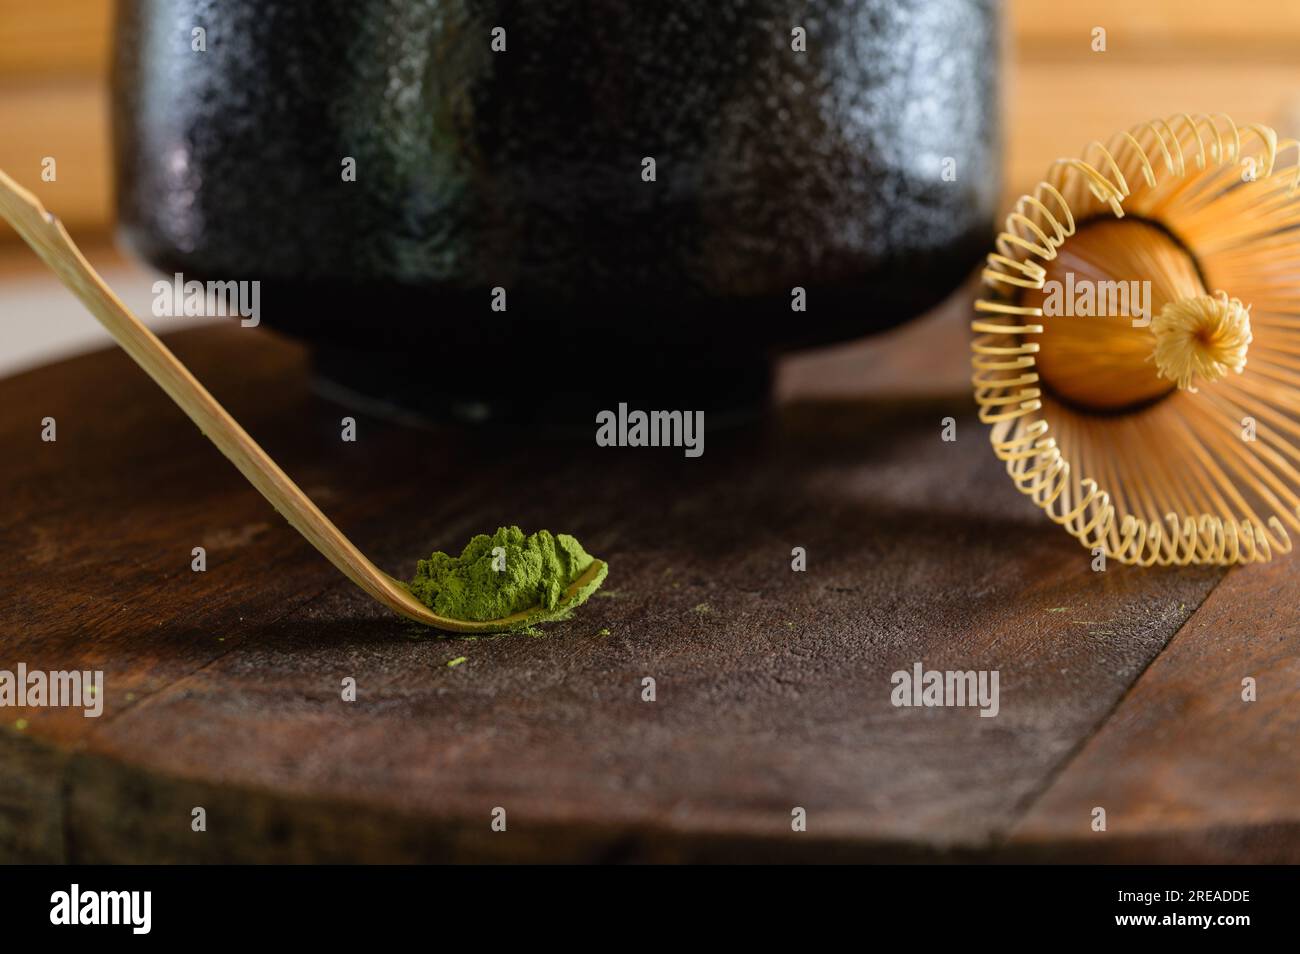 https://c8.alamy.com/comp/2READDE/bamboo-matcha-spoon-for-brewing-japanese-tea-matcha-tea-making-japanese-matcha-tea-herbal-drink-healthy-drink-2READDE.jpg